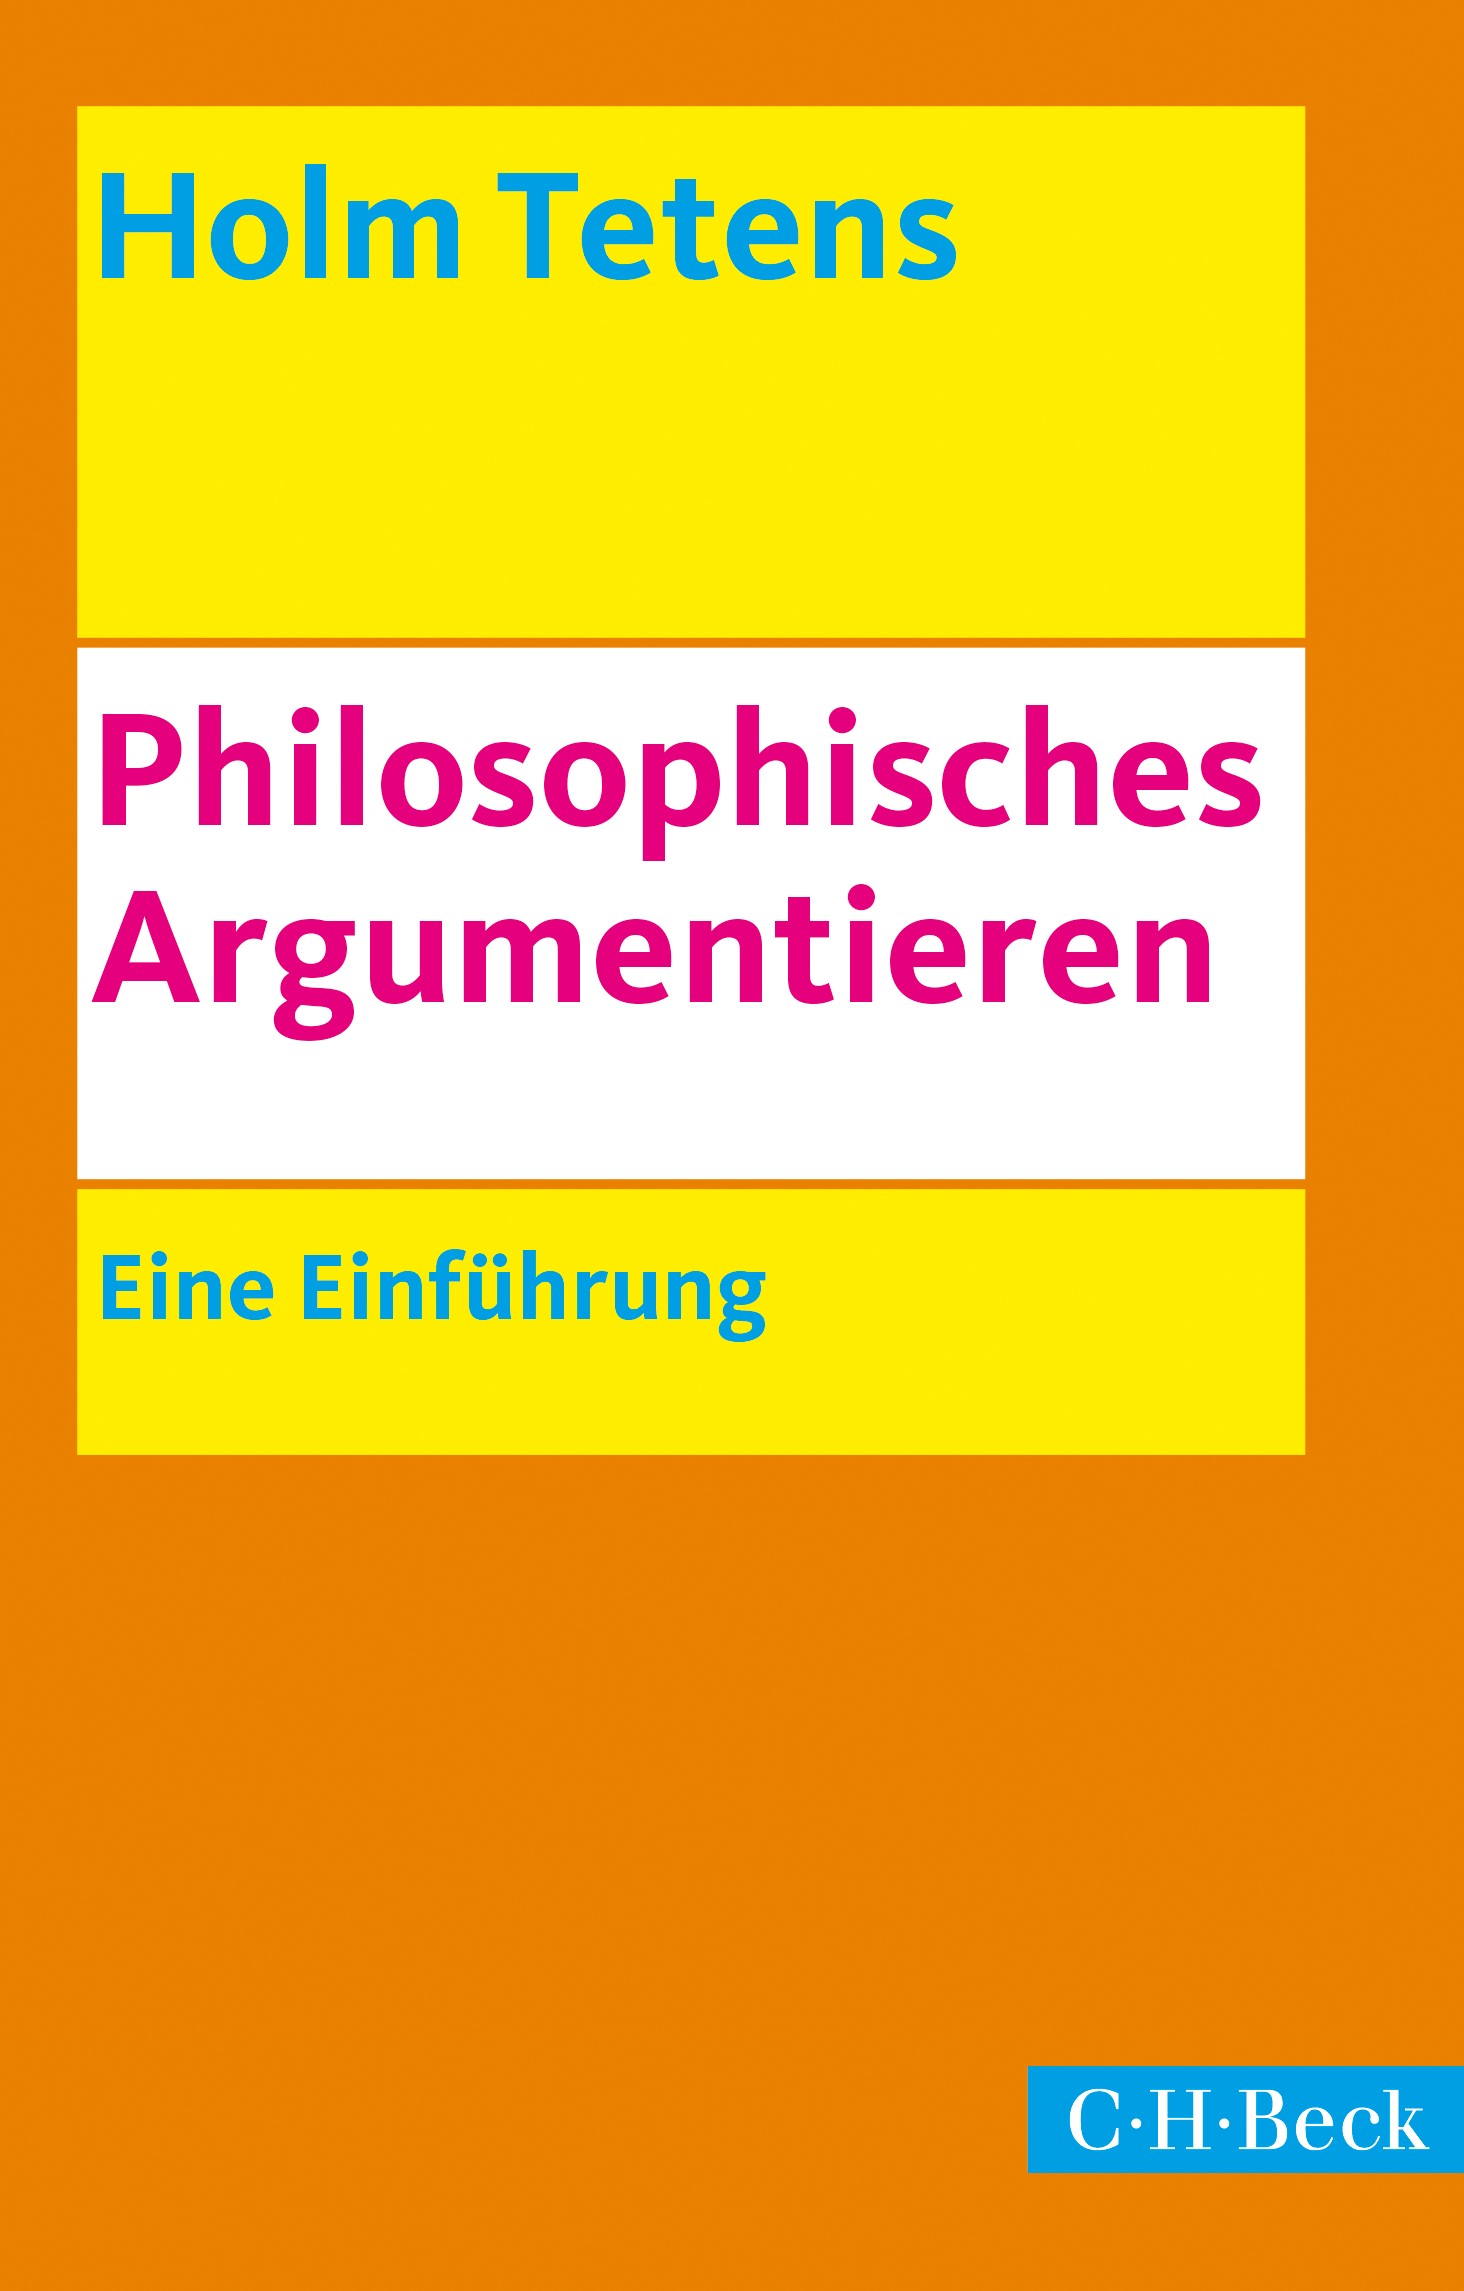 Cover: Tetens, Holm, Philosophisches Argumentieren